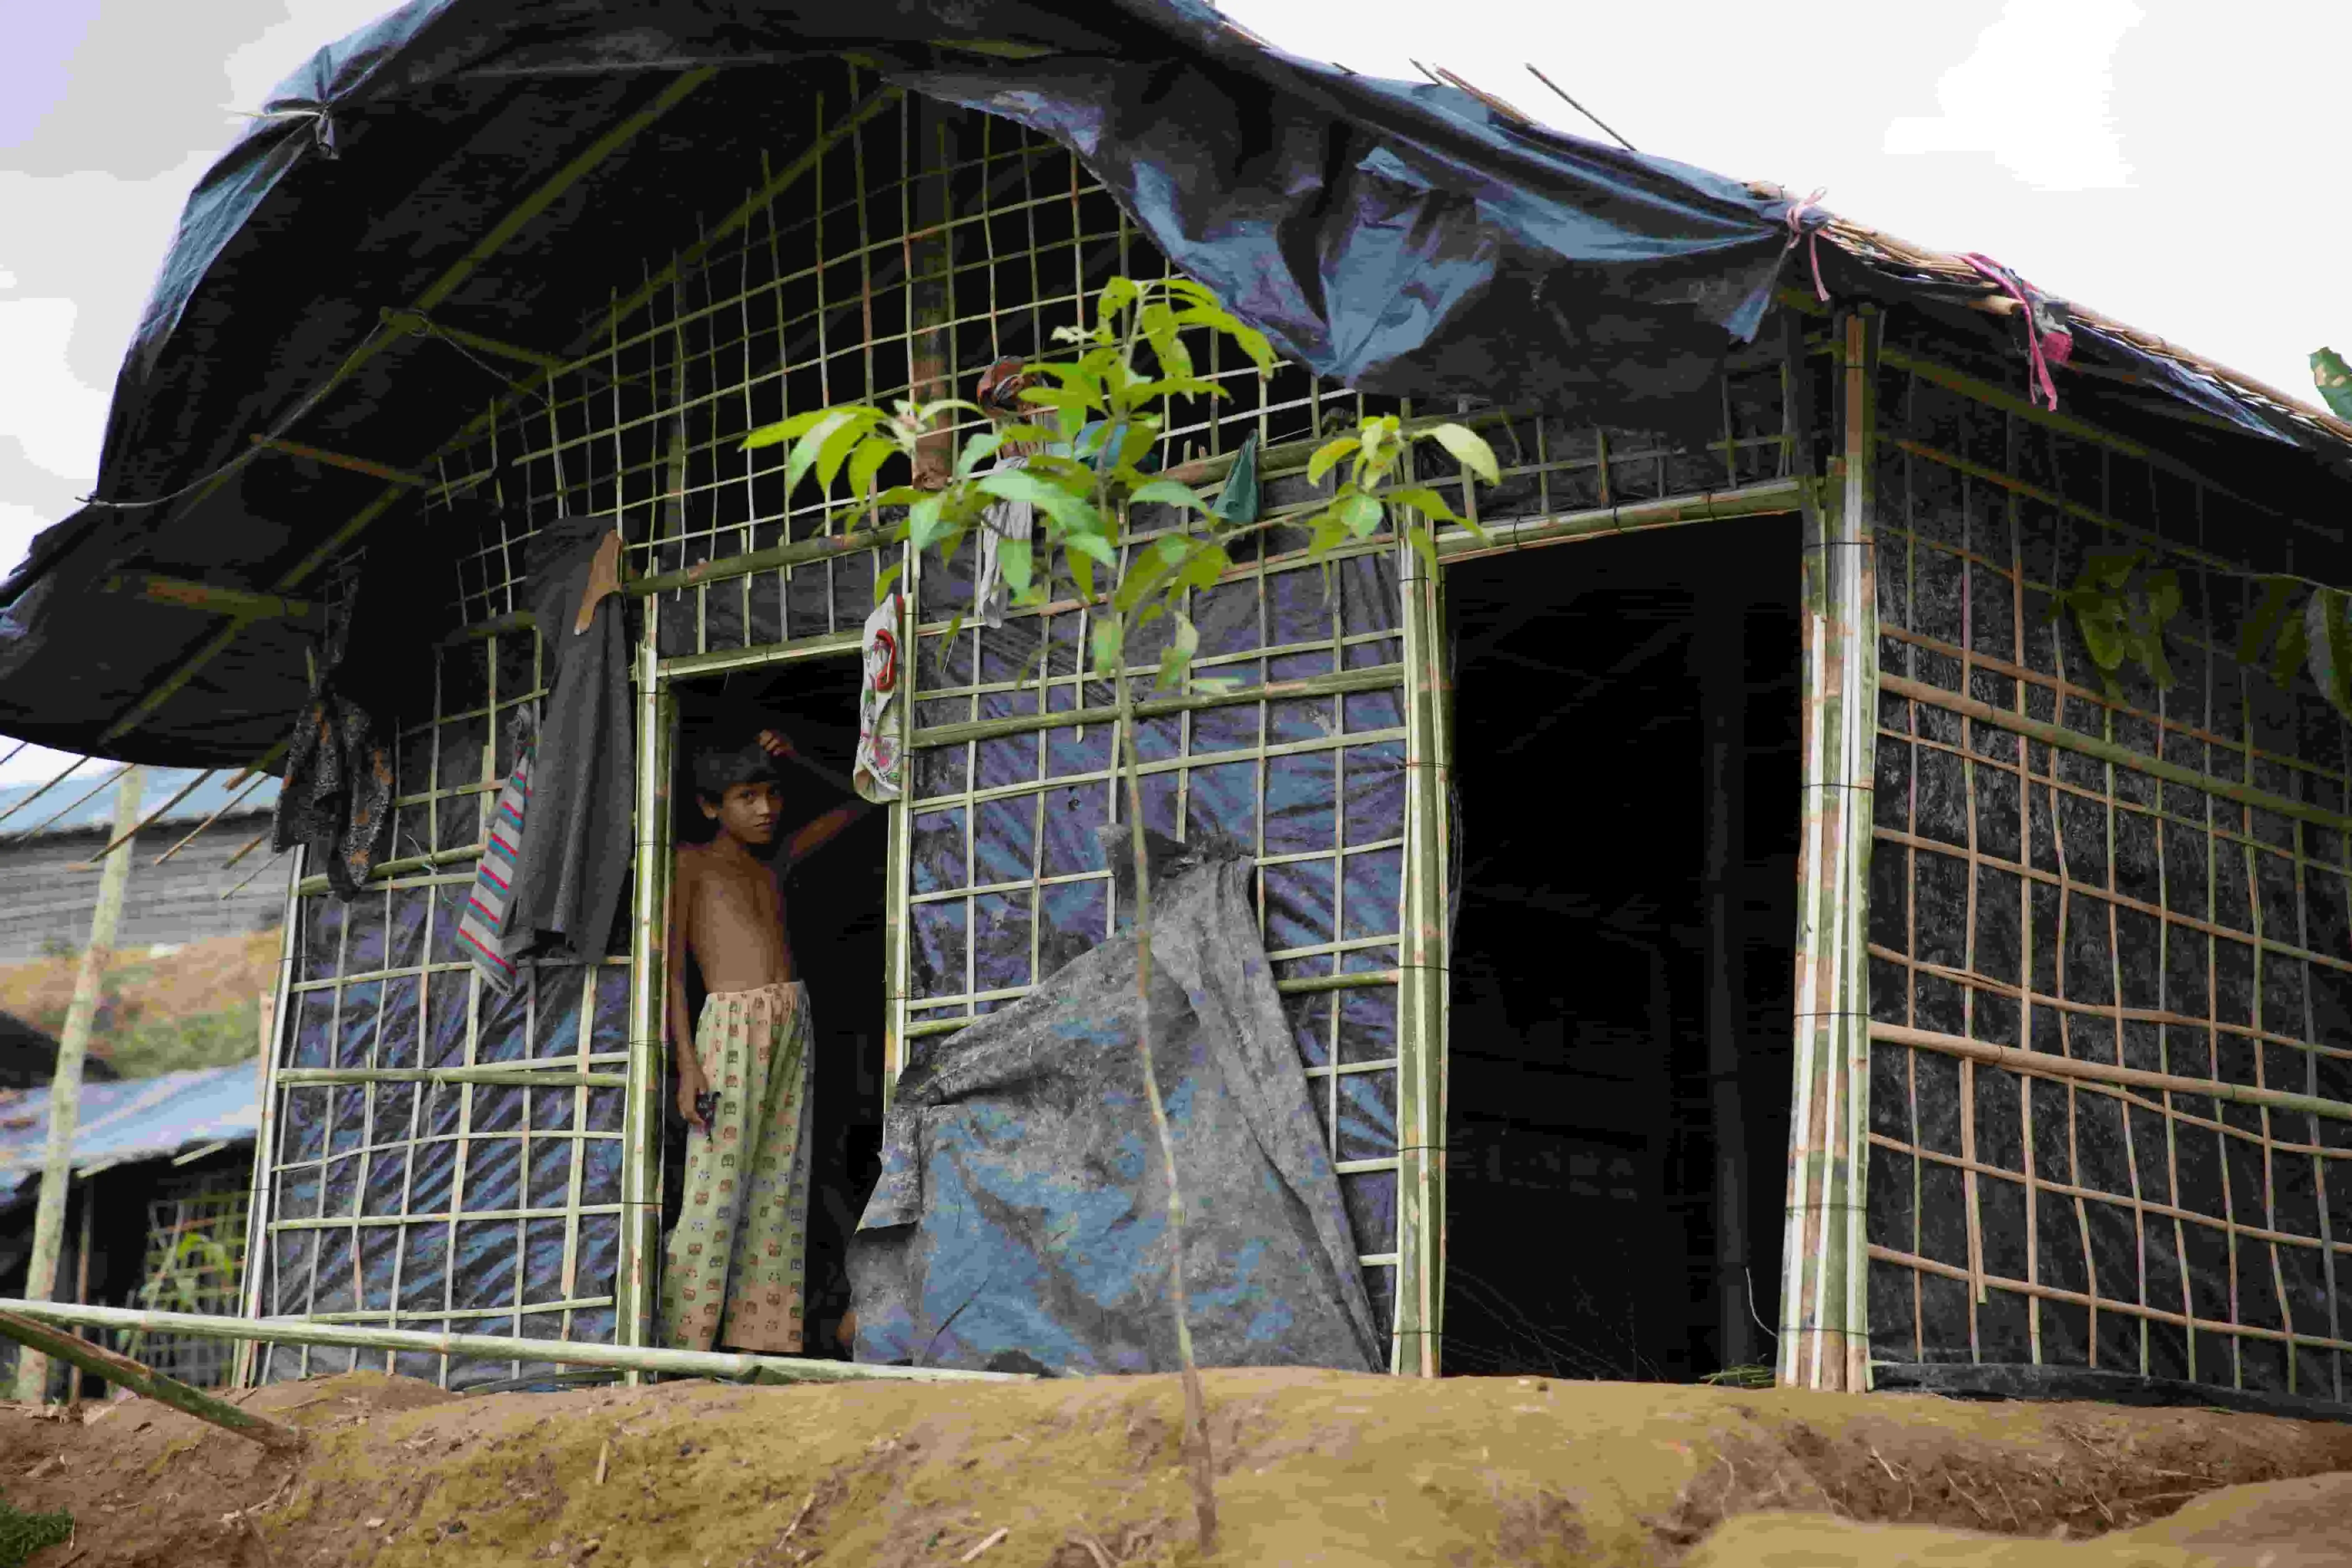 A refugee camp in Bangladesh